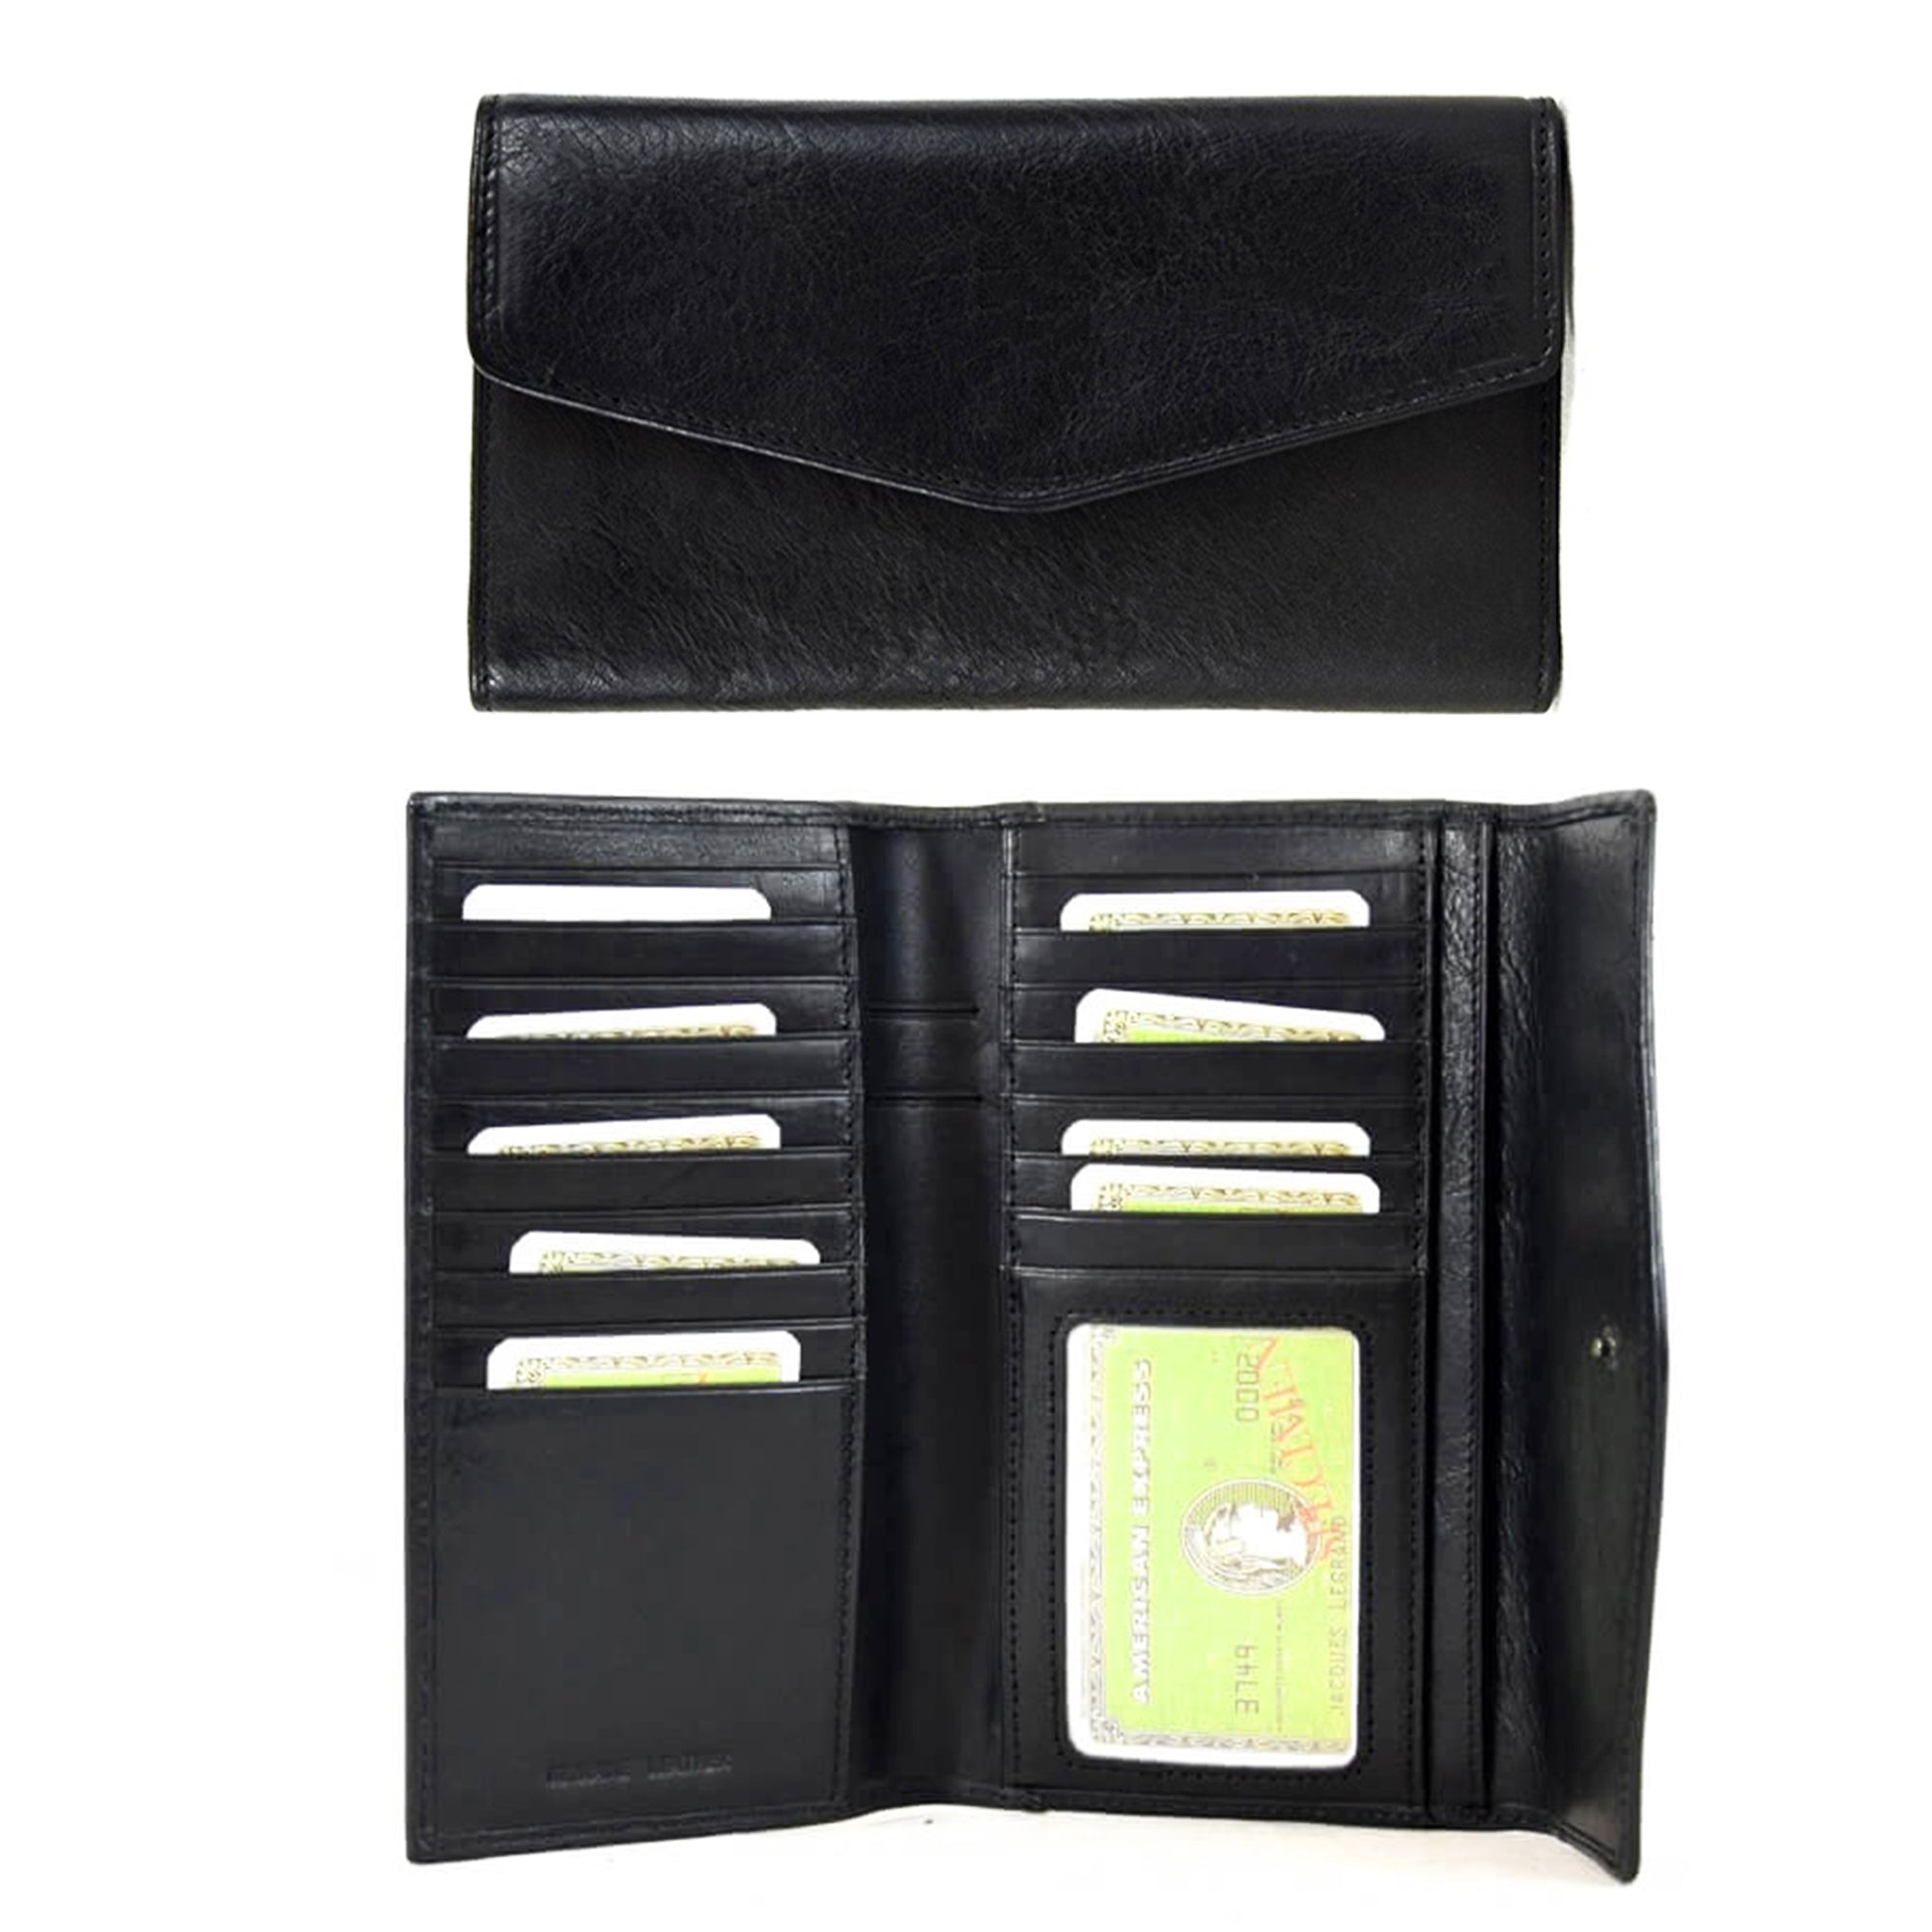 Lavendar Ladies wallets - Ladies wallet, purse, designer wallet - M J  Leathers | LinkedIn